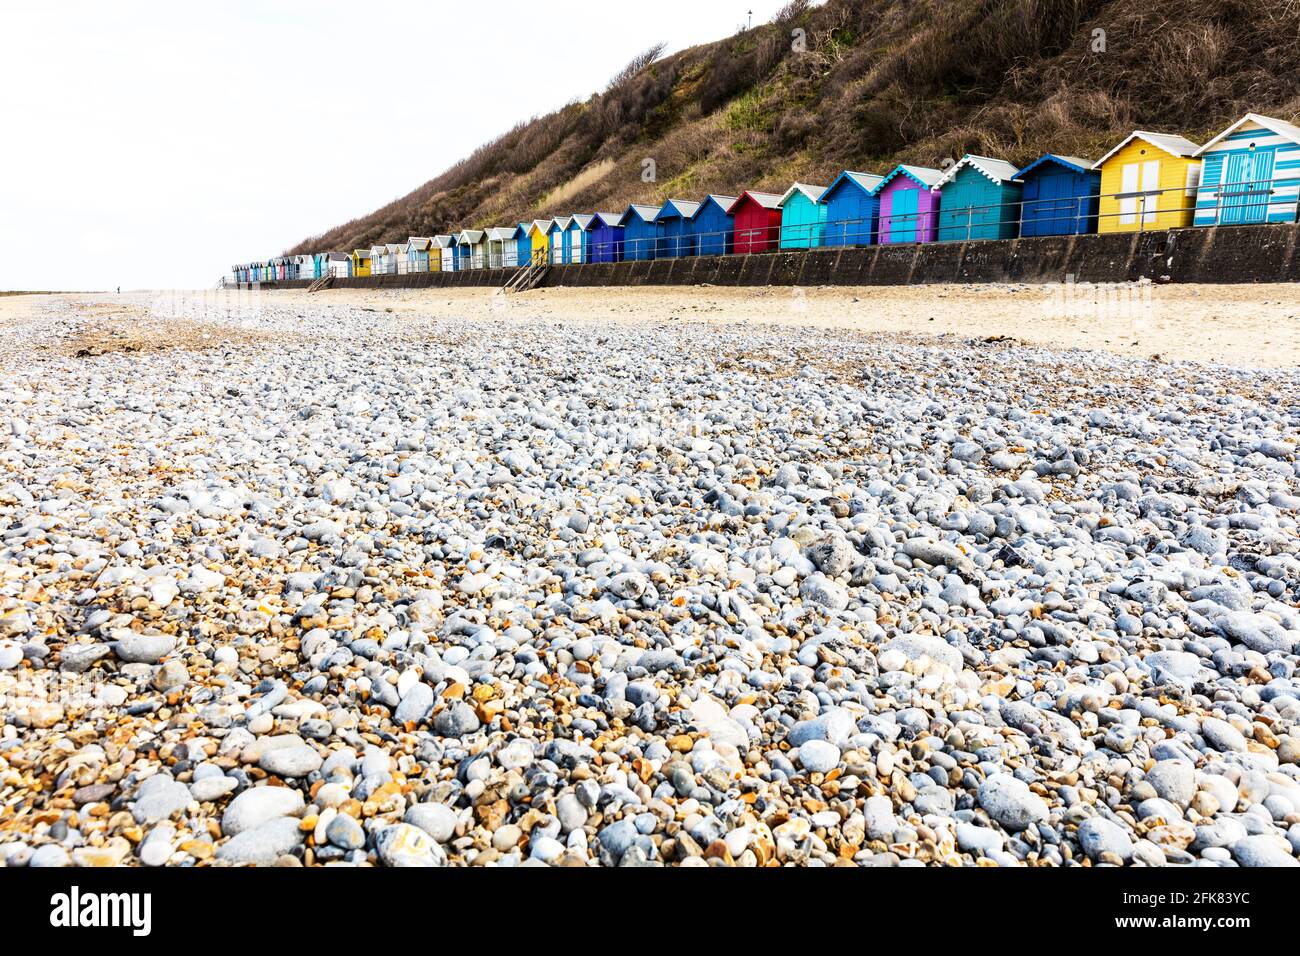 Cromer Beach huts, Beach huts,Cromer, Norfolk, UK, England,Beach shacks,chalets,cromer chalets,cromer Beach,Norfolk Coastline,littoral,côte,plages Banque D'Images